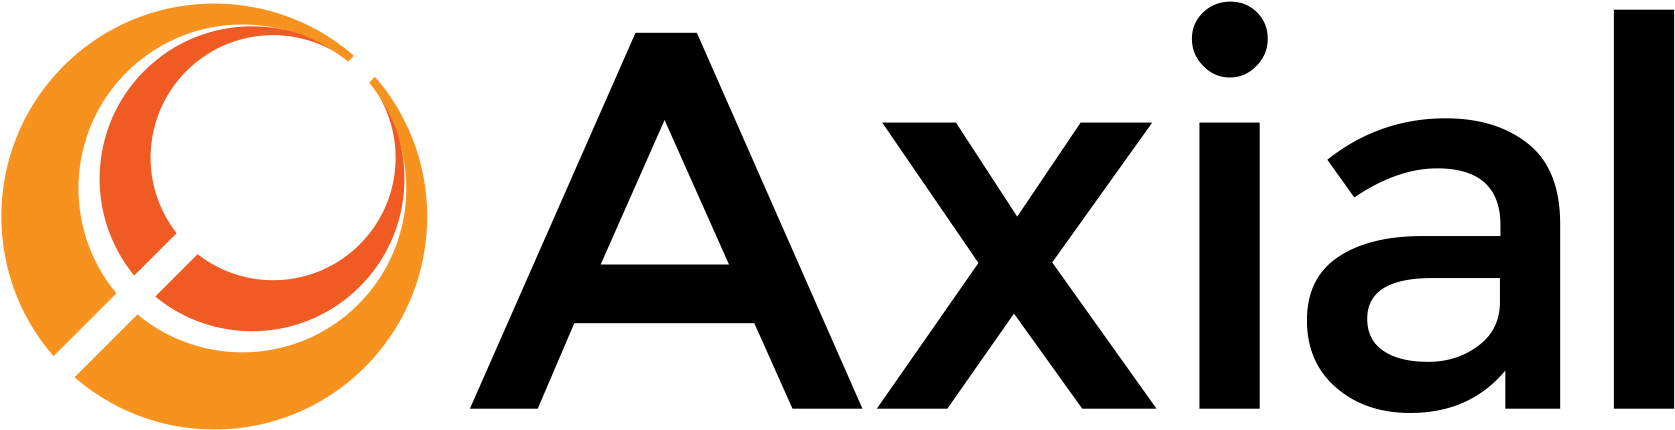 Axial Logo - Axial Roland (1875x449)